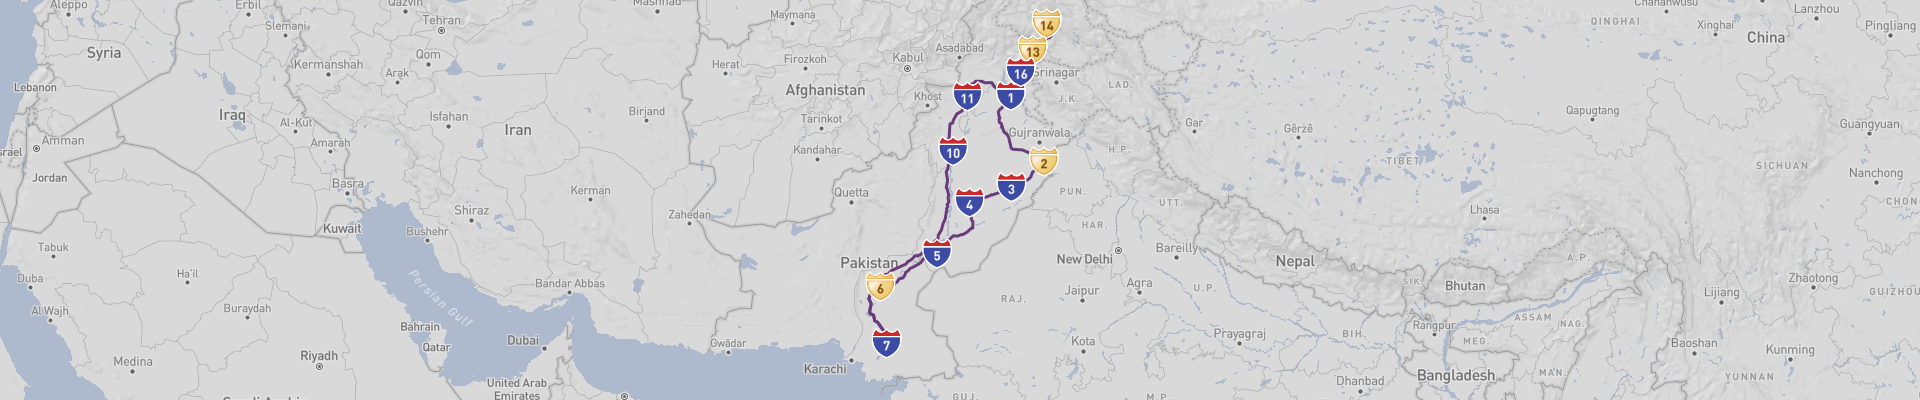 Pakistan Road Trip